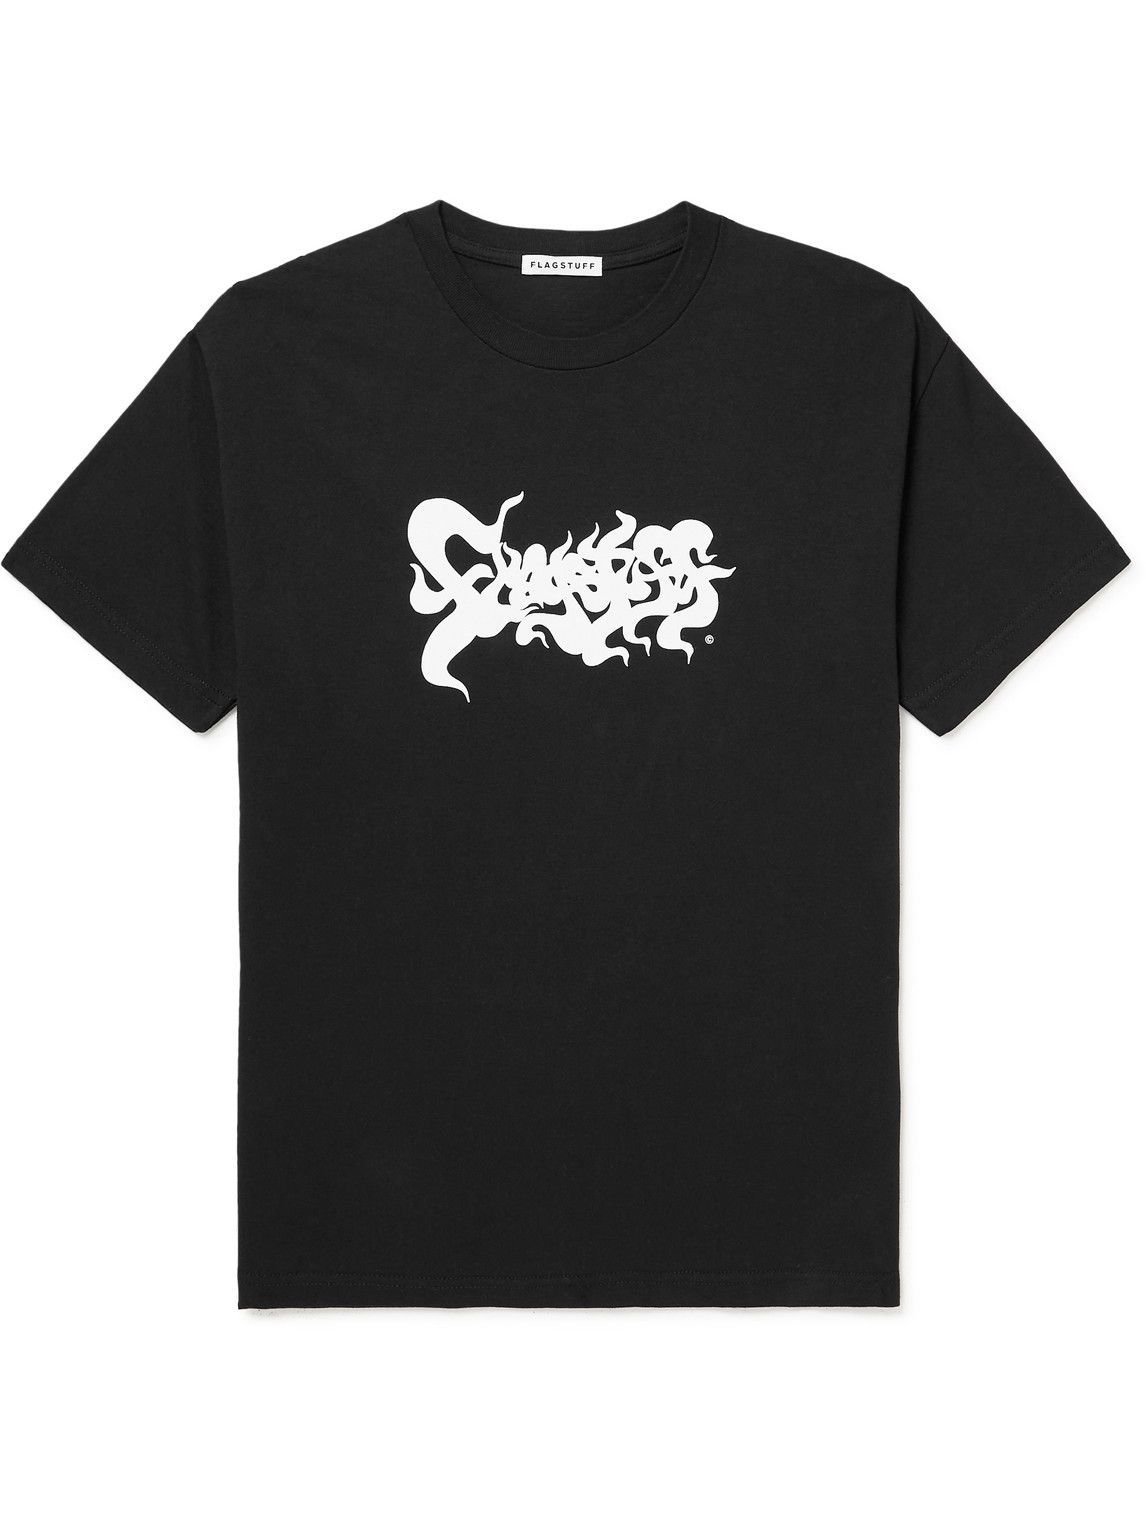 Flagstuff - Printed Cotton-Jersey T-Shirt - Black Flagstuff